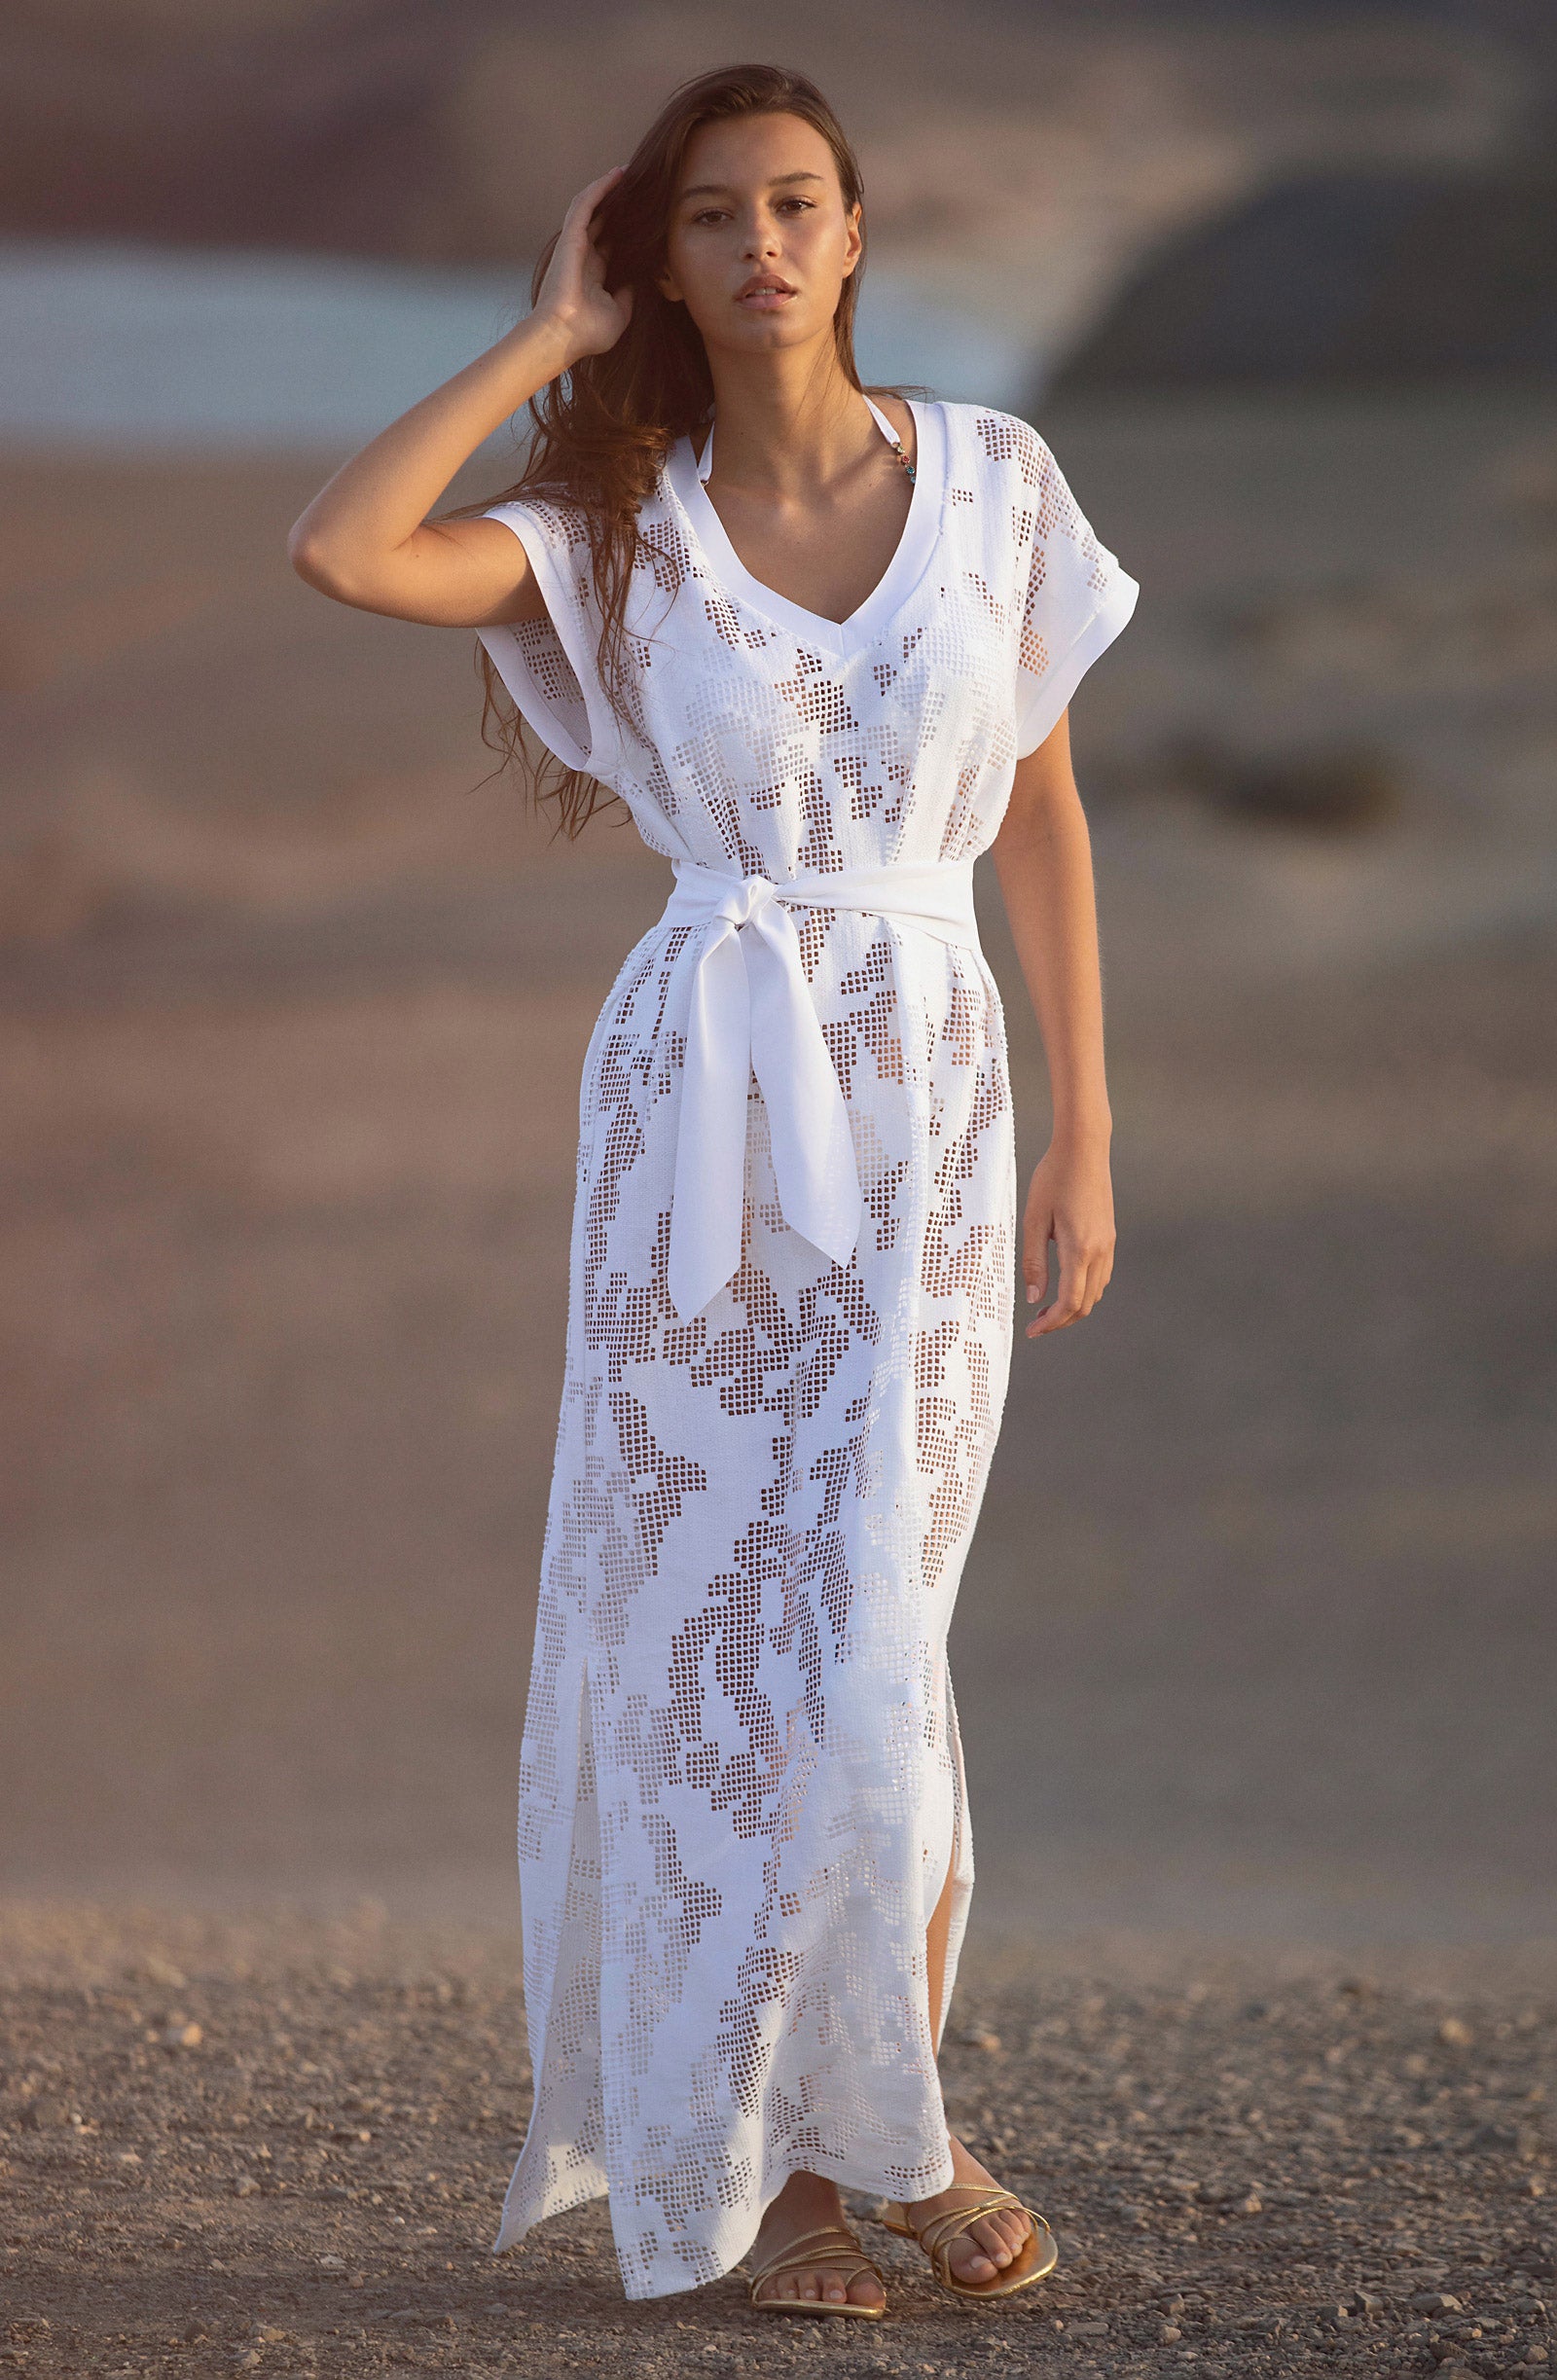 raina - Long white perforated dress